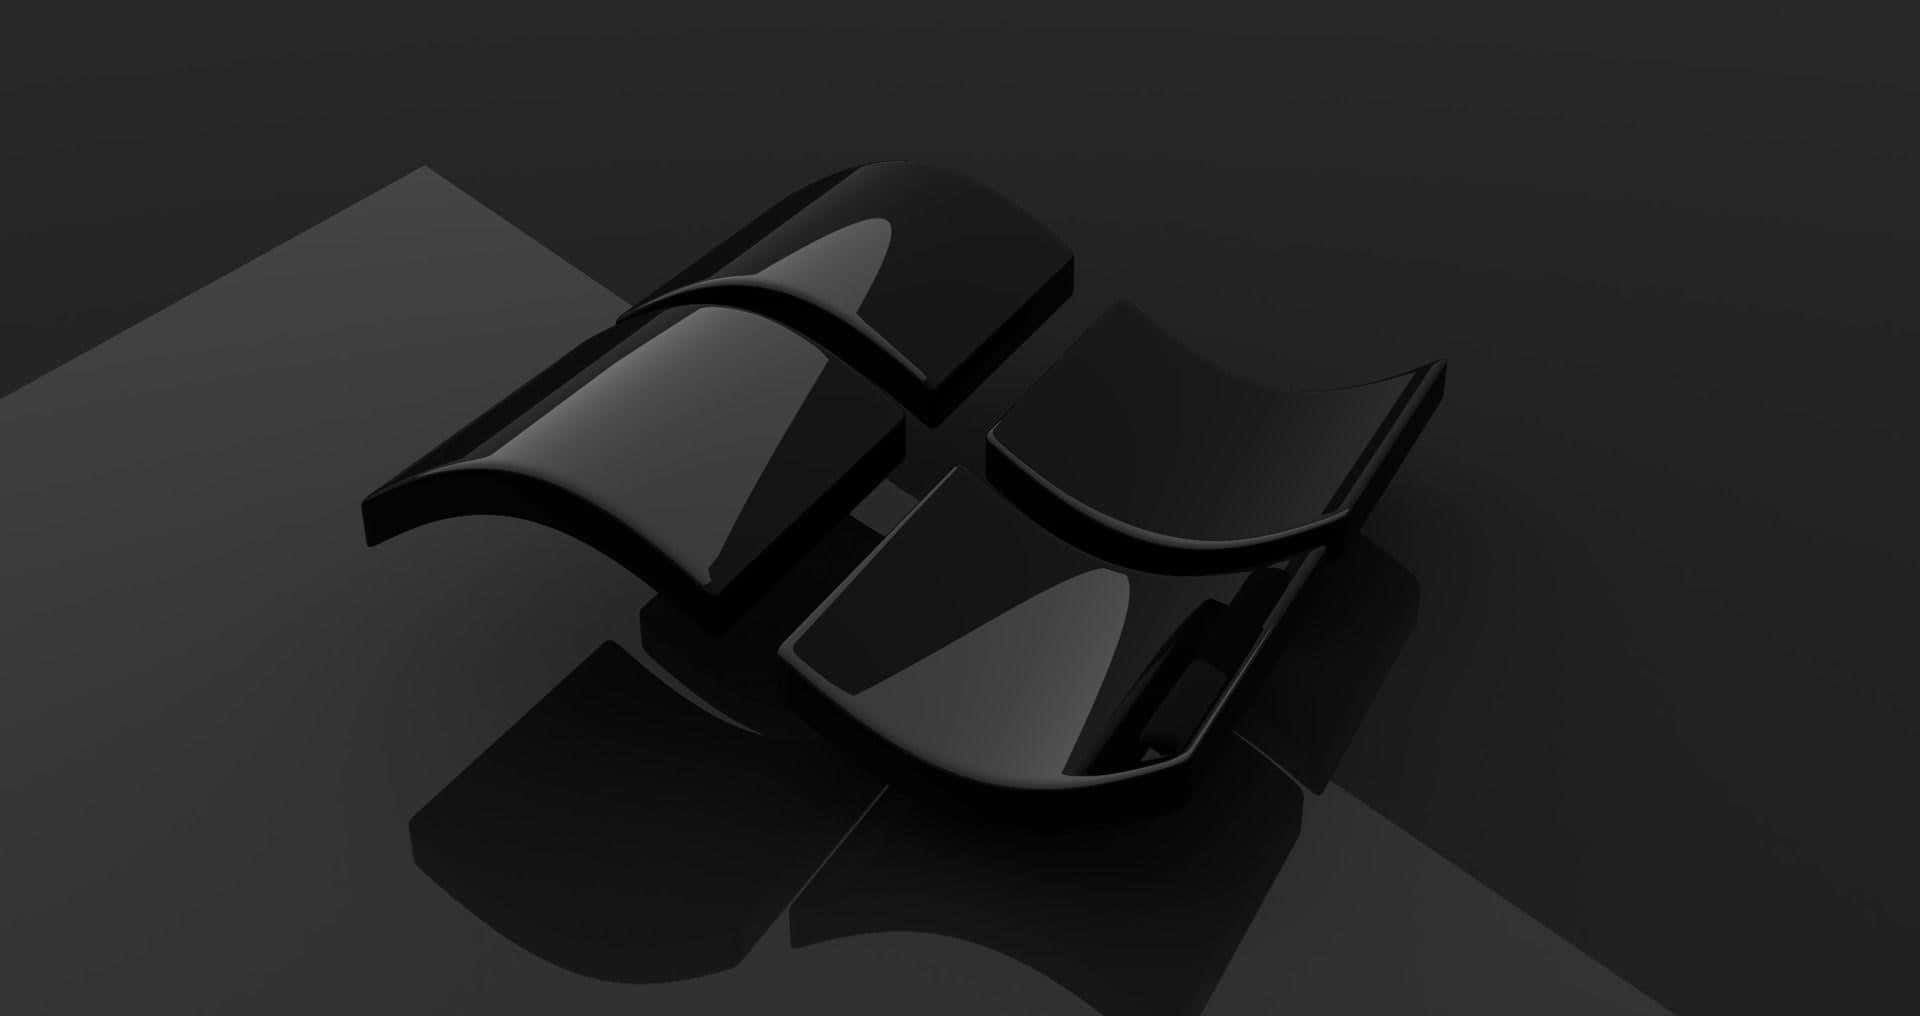 Windows Logo On A Black Surface